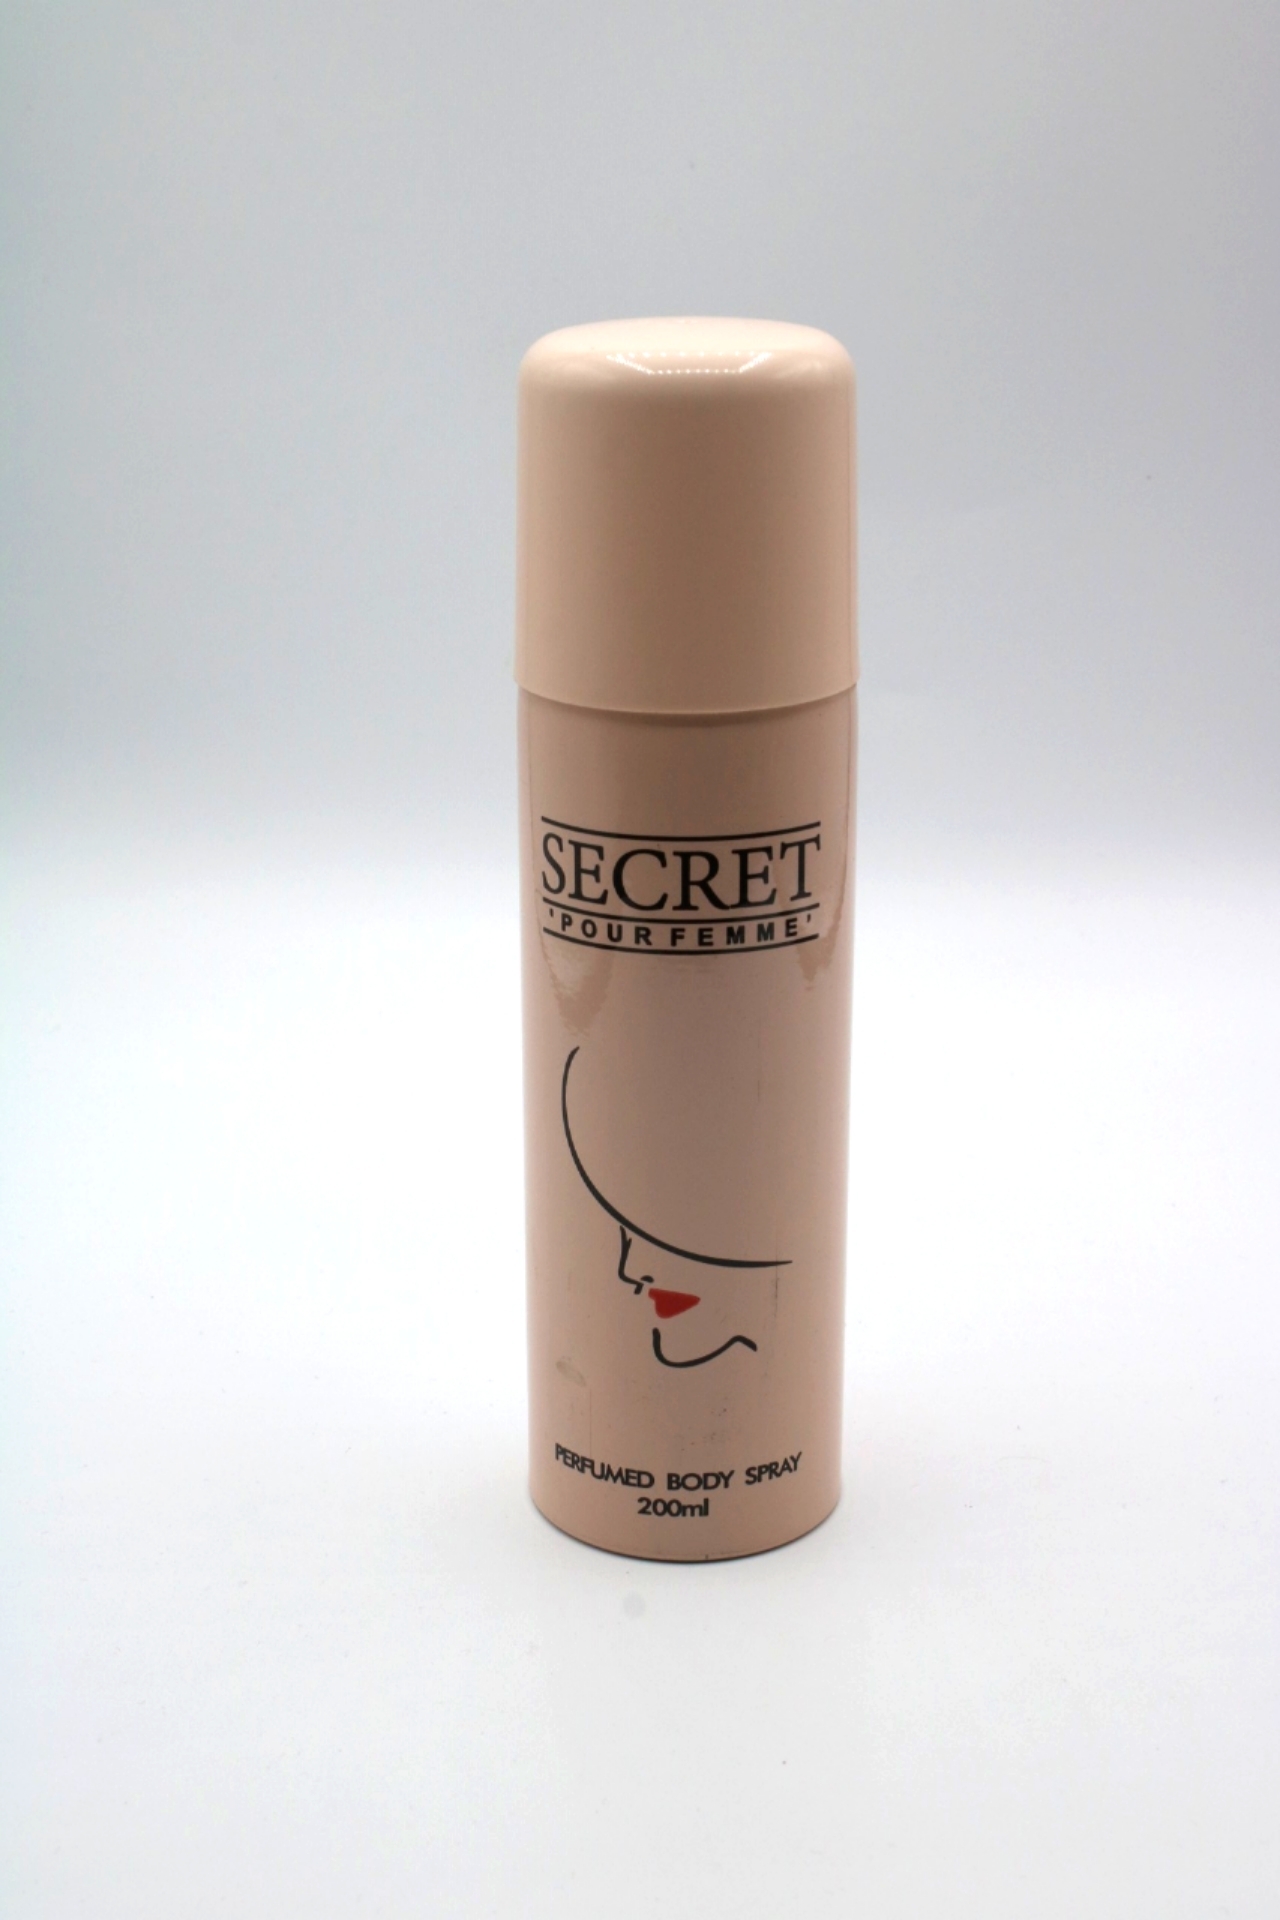 Secret pour femme Perfumed Body Spray 200ml